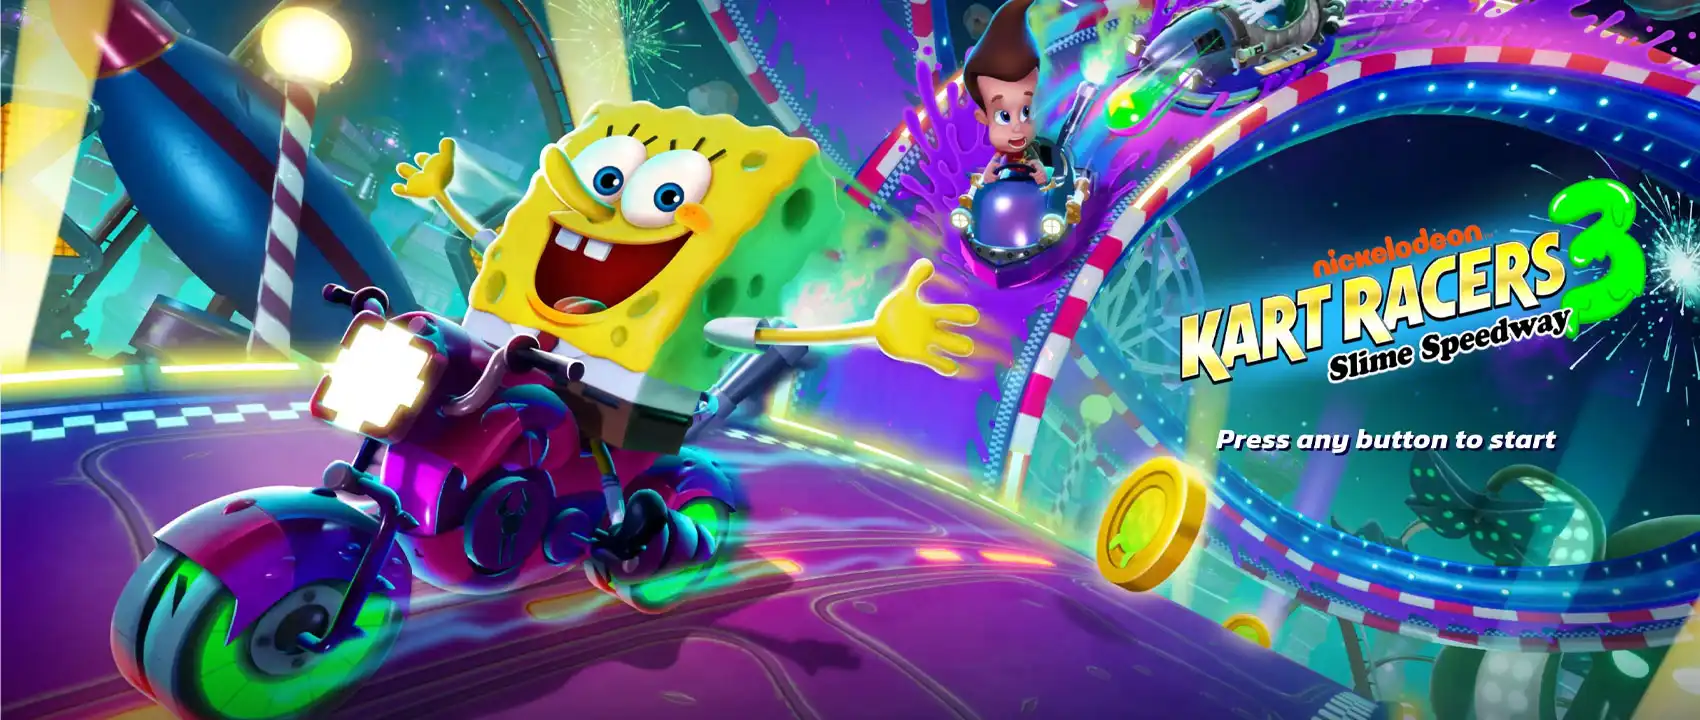 بازی Nickelodeon Kart Racers 3 برای PS5